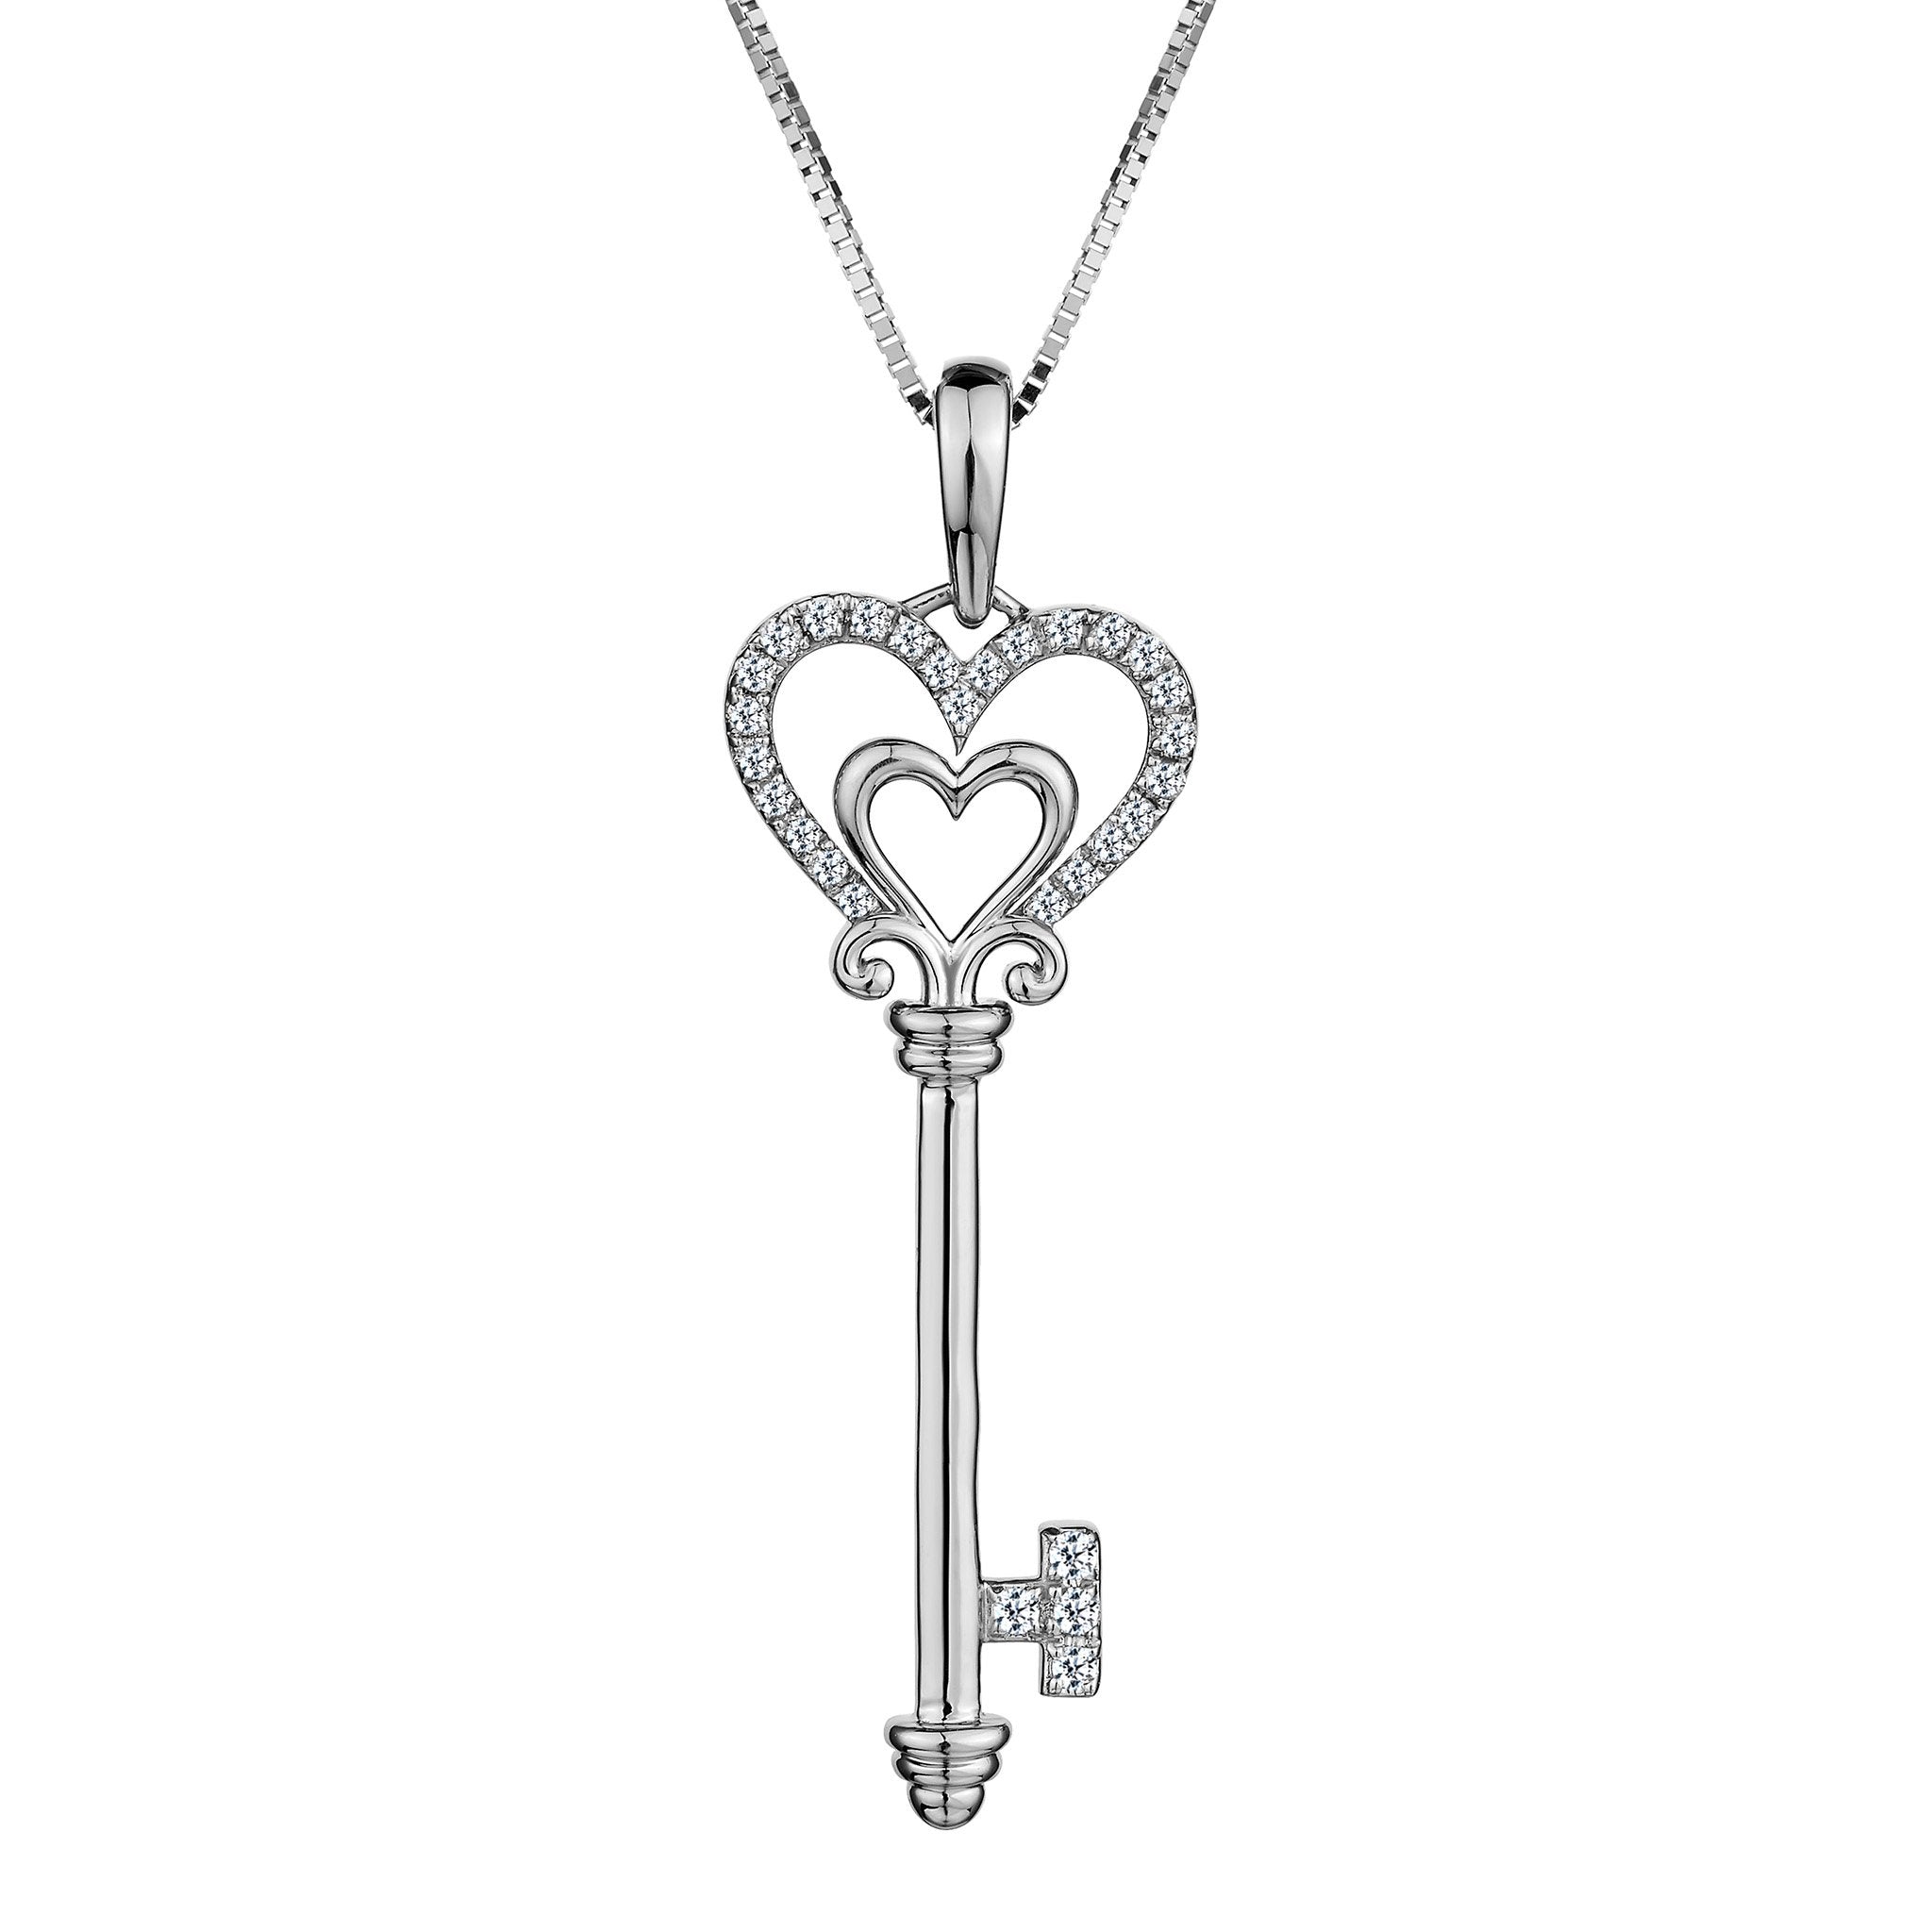 .15 Carat Diamond "Love Key" Pendant,  10kt White Gold. Necklaces and Pendants. Griffin Jewellery Designs.